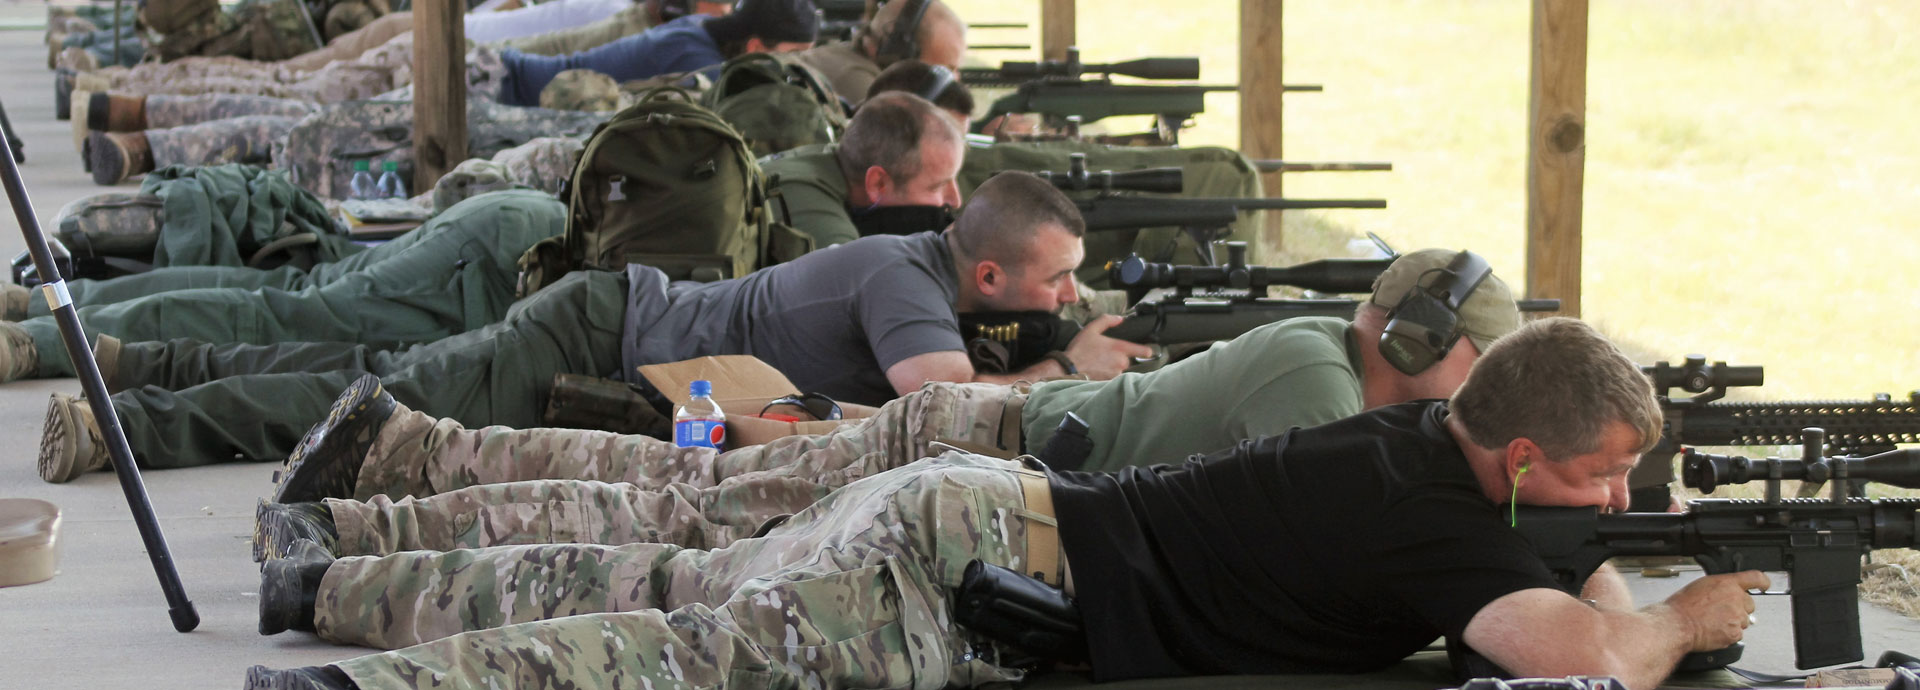 atoa sniper training